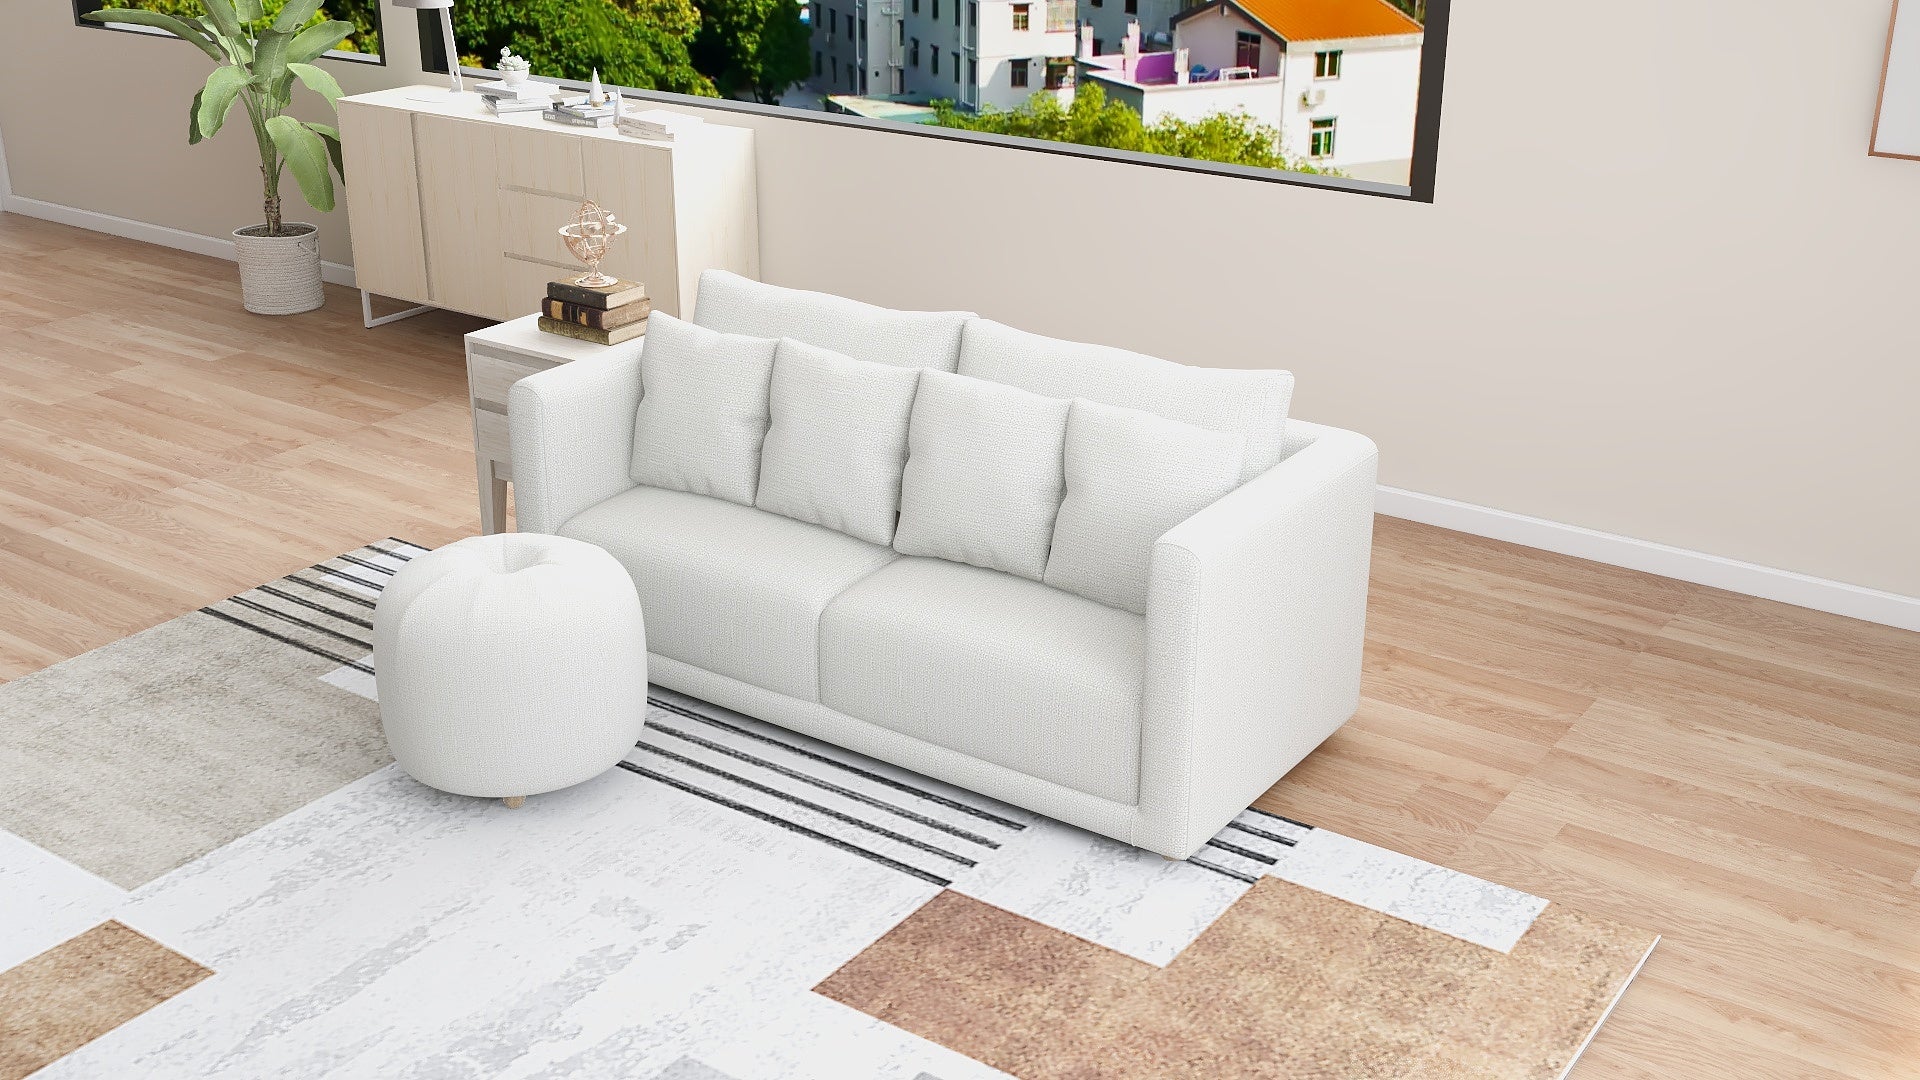 FALLON 2-Seater Fabric Sofa with Ottoman AF Home